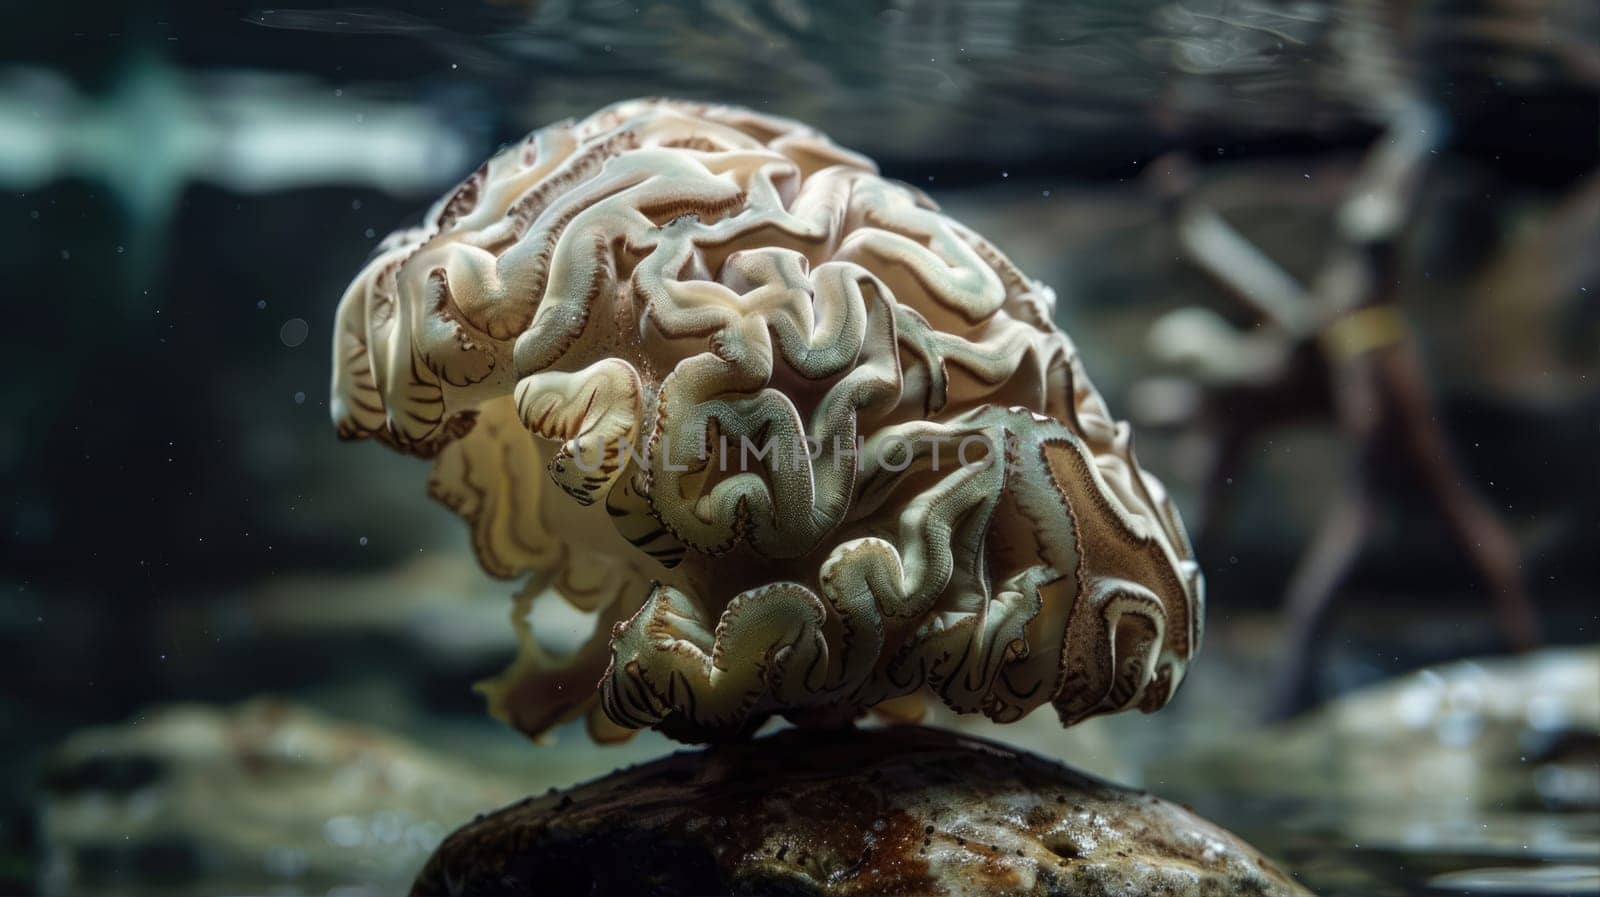 A brainlike organism found on coral reefs underwater by natali_brill